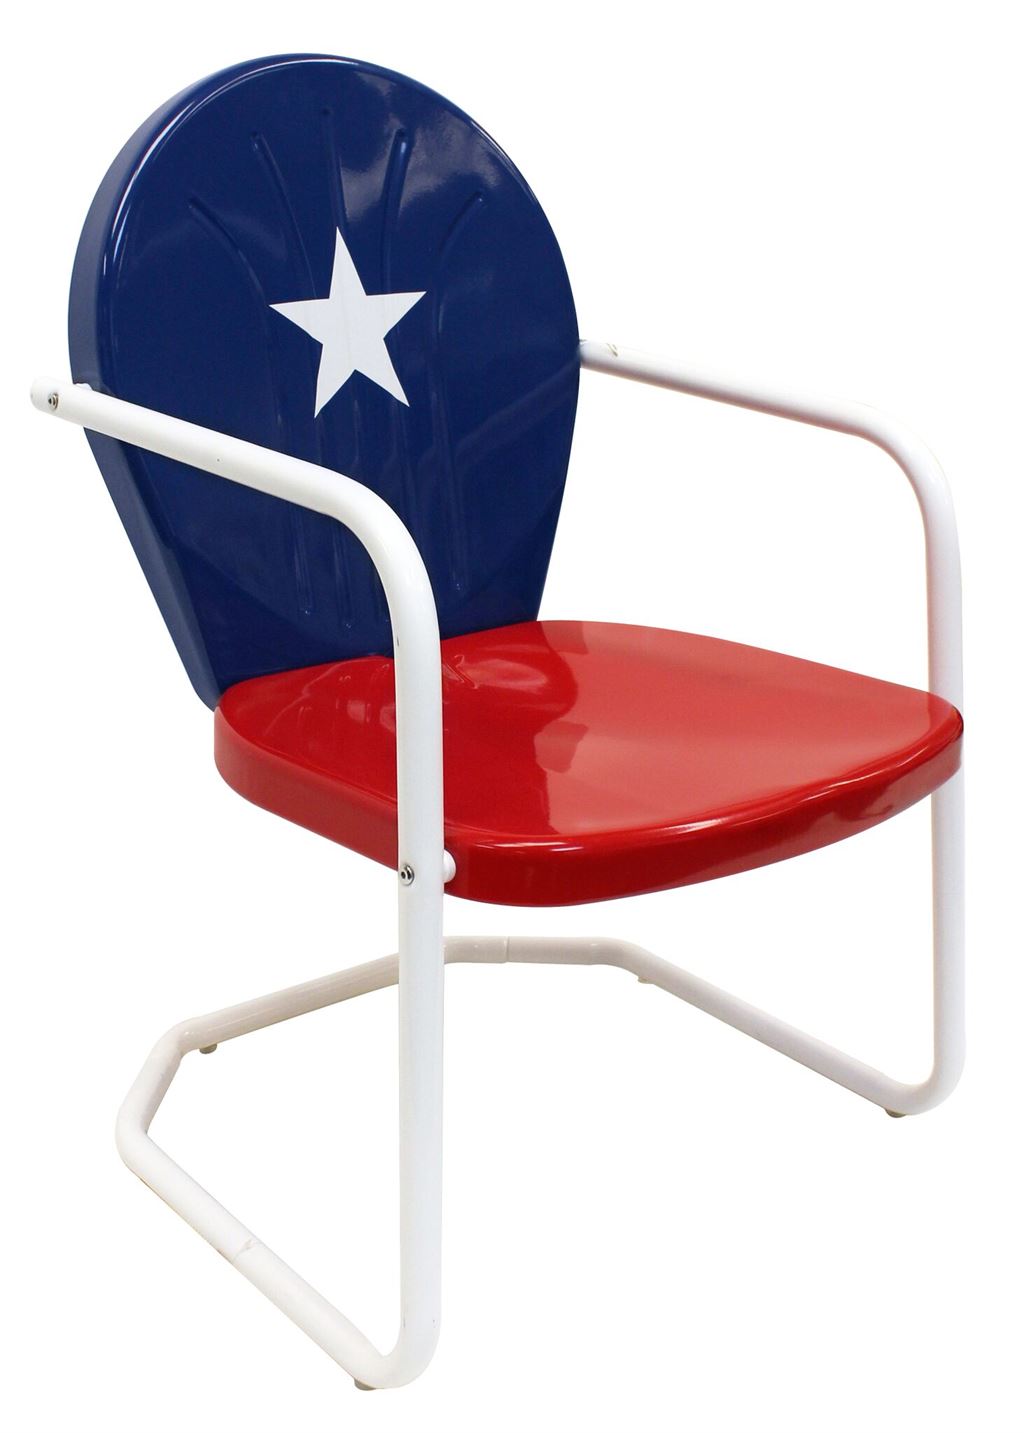 Retro Metal Texas Lawn Chair for your Texas Patio